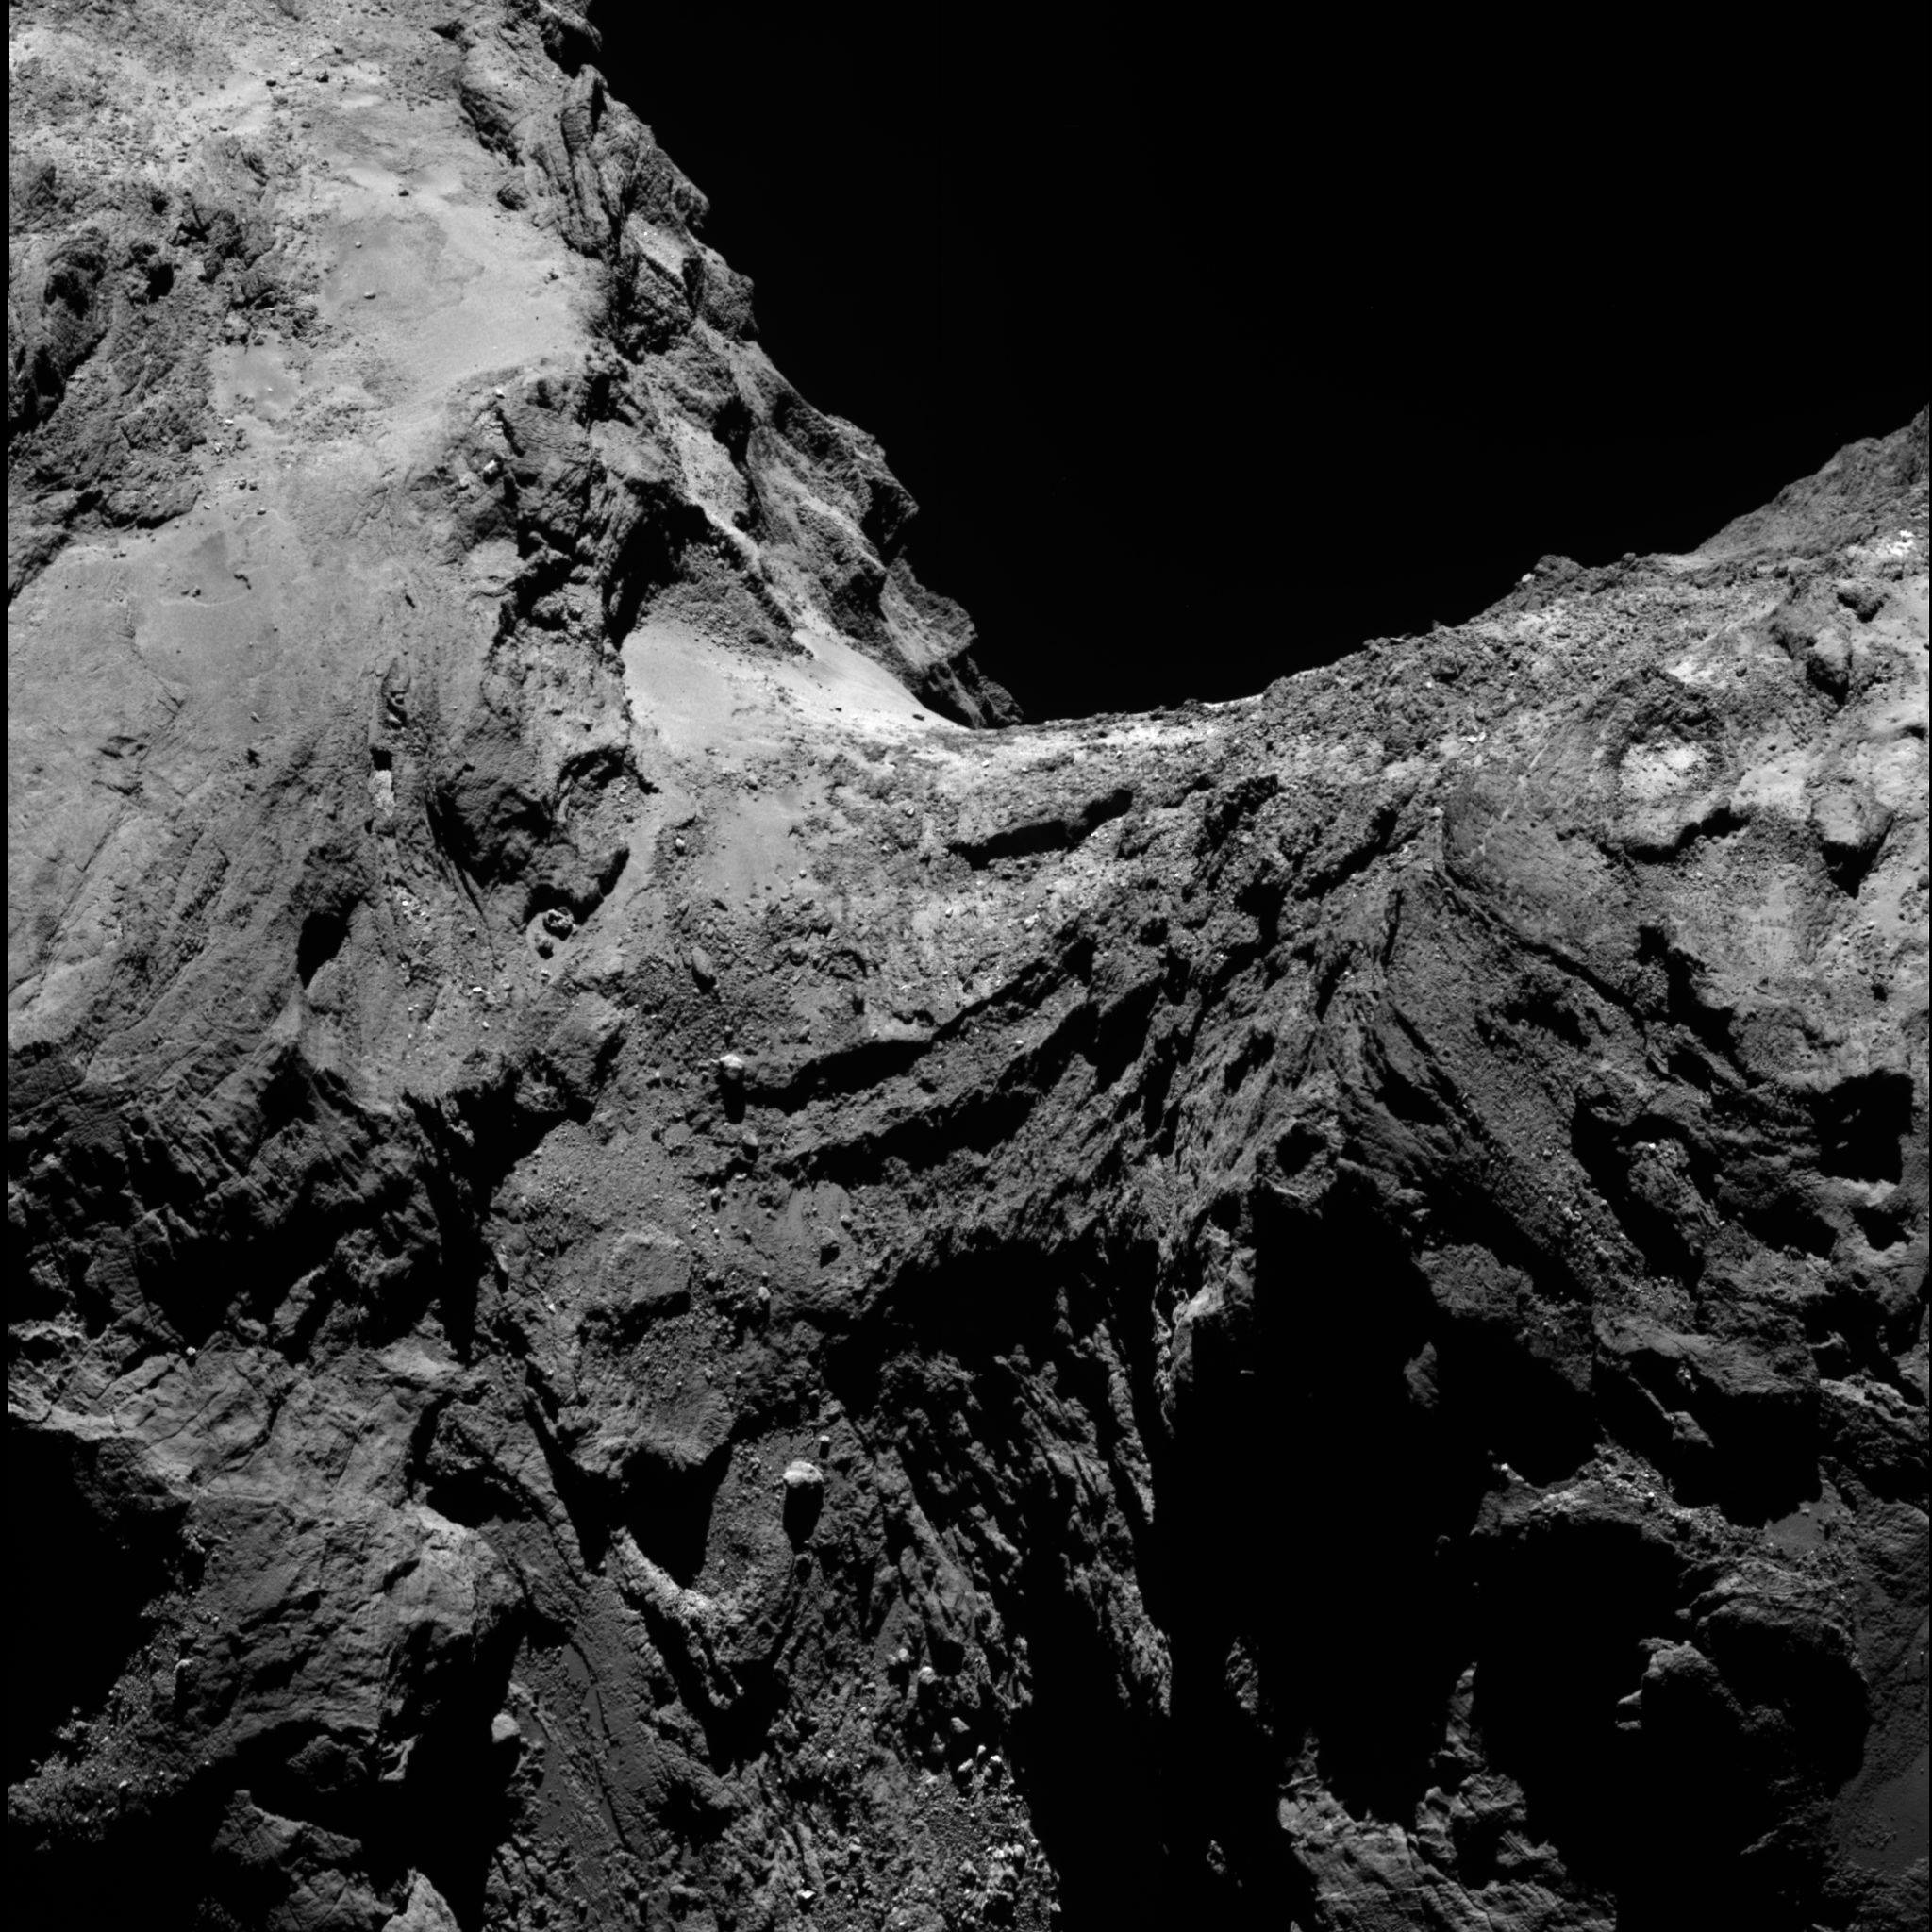 From ESA: "Comet 67P/C-G on 30 January taken by Rosetta's OSIRIS narrow-angle camera from a distance of 62 km." Image Credit: ESA/Rosetta/MPS for OSIRIS Team MPS/UPD/LAM/IAA/SSO/INTA/UPM/DASP/IDA